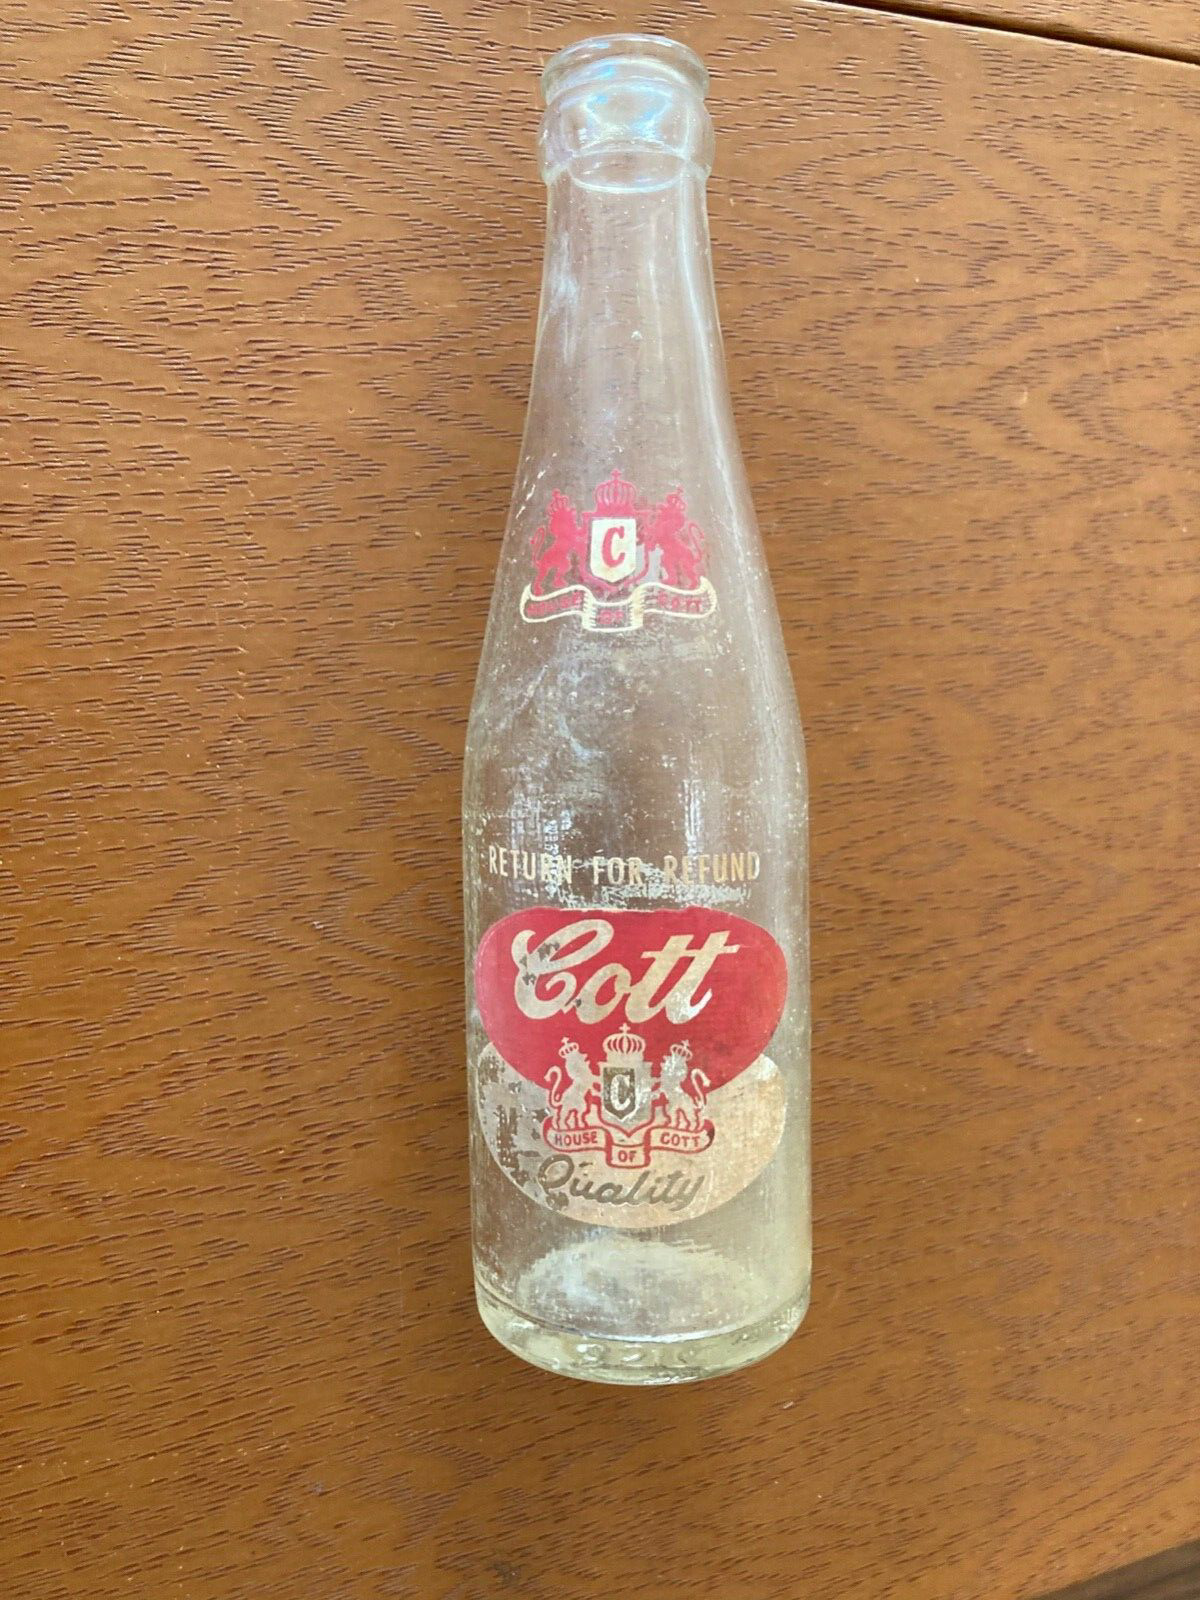 Vintage Cott Soda Bottle  Manchester, New Hampshire 50's/60's?